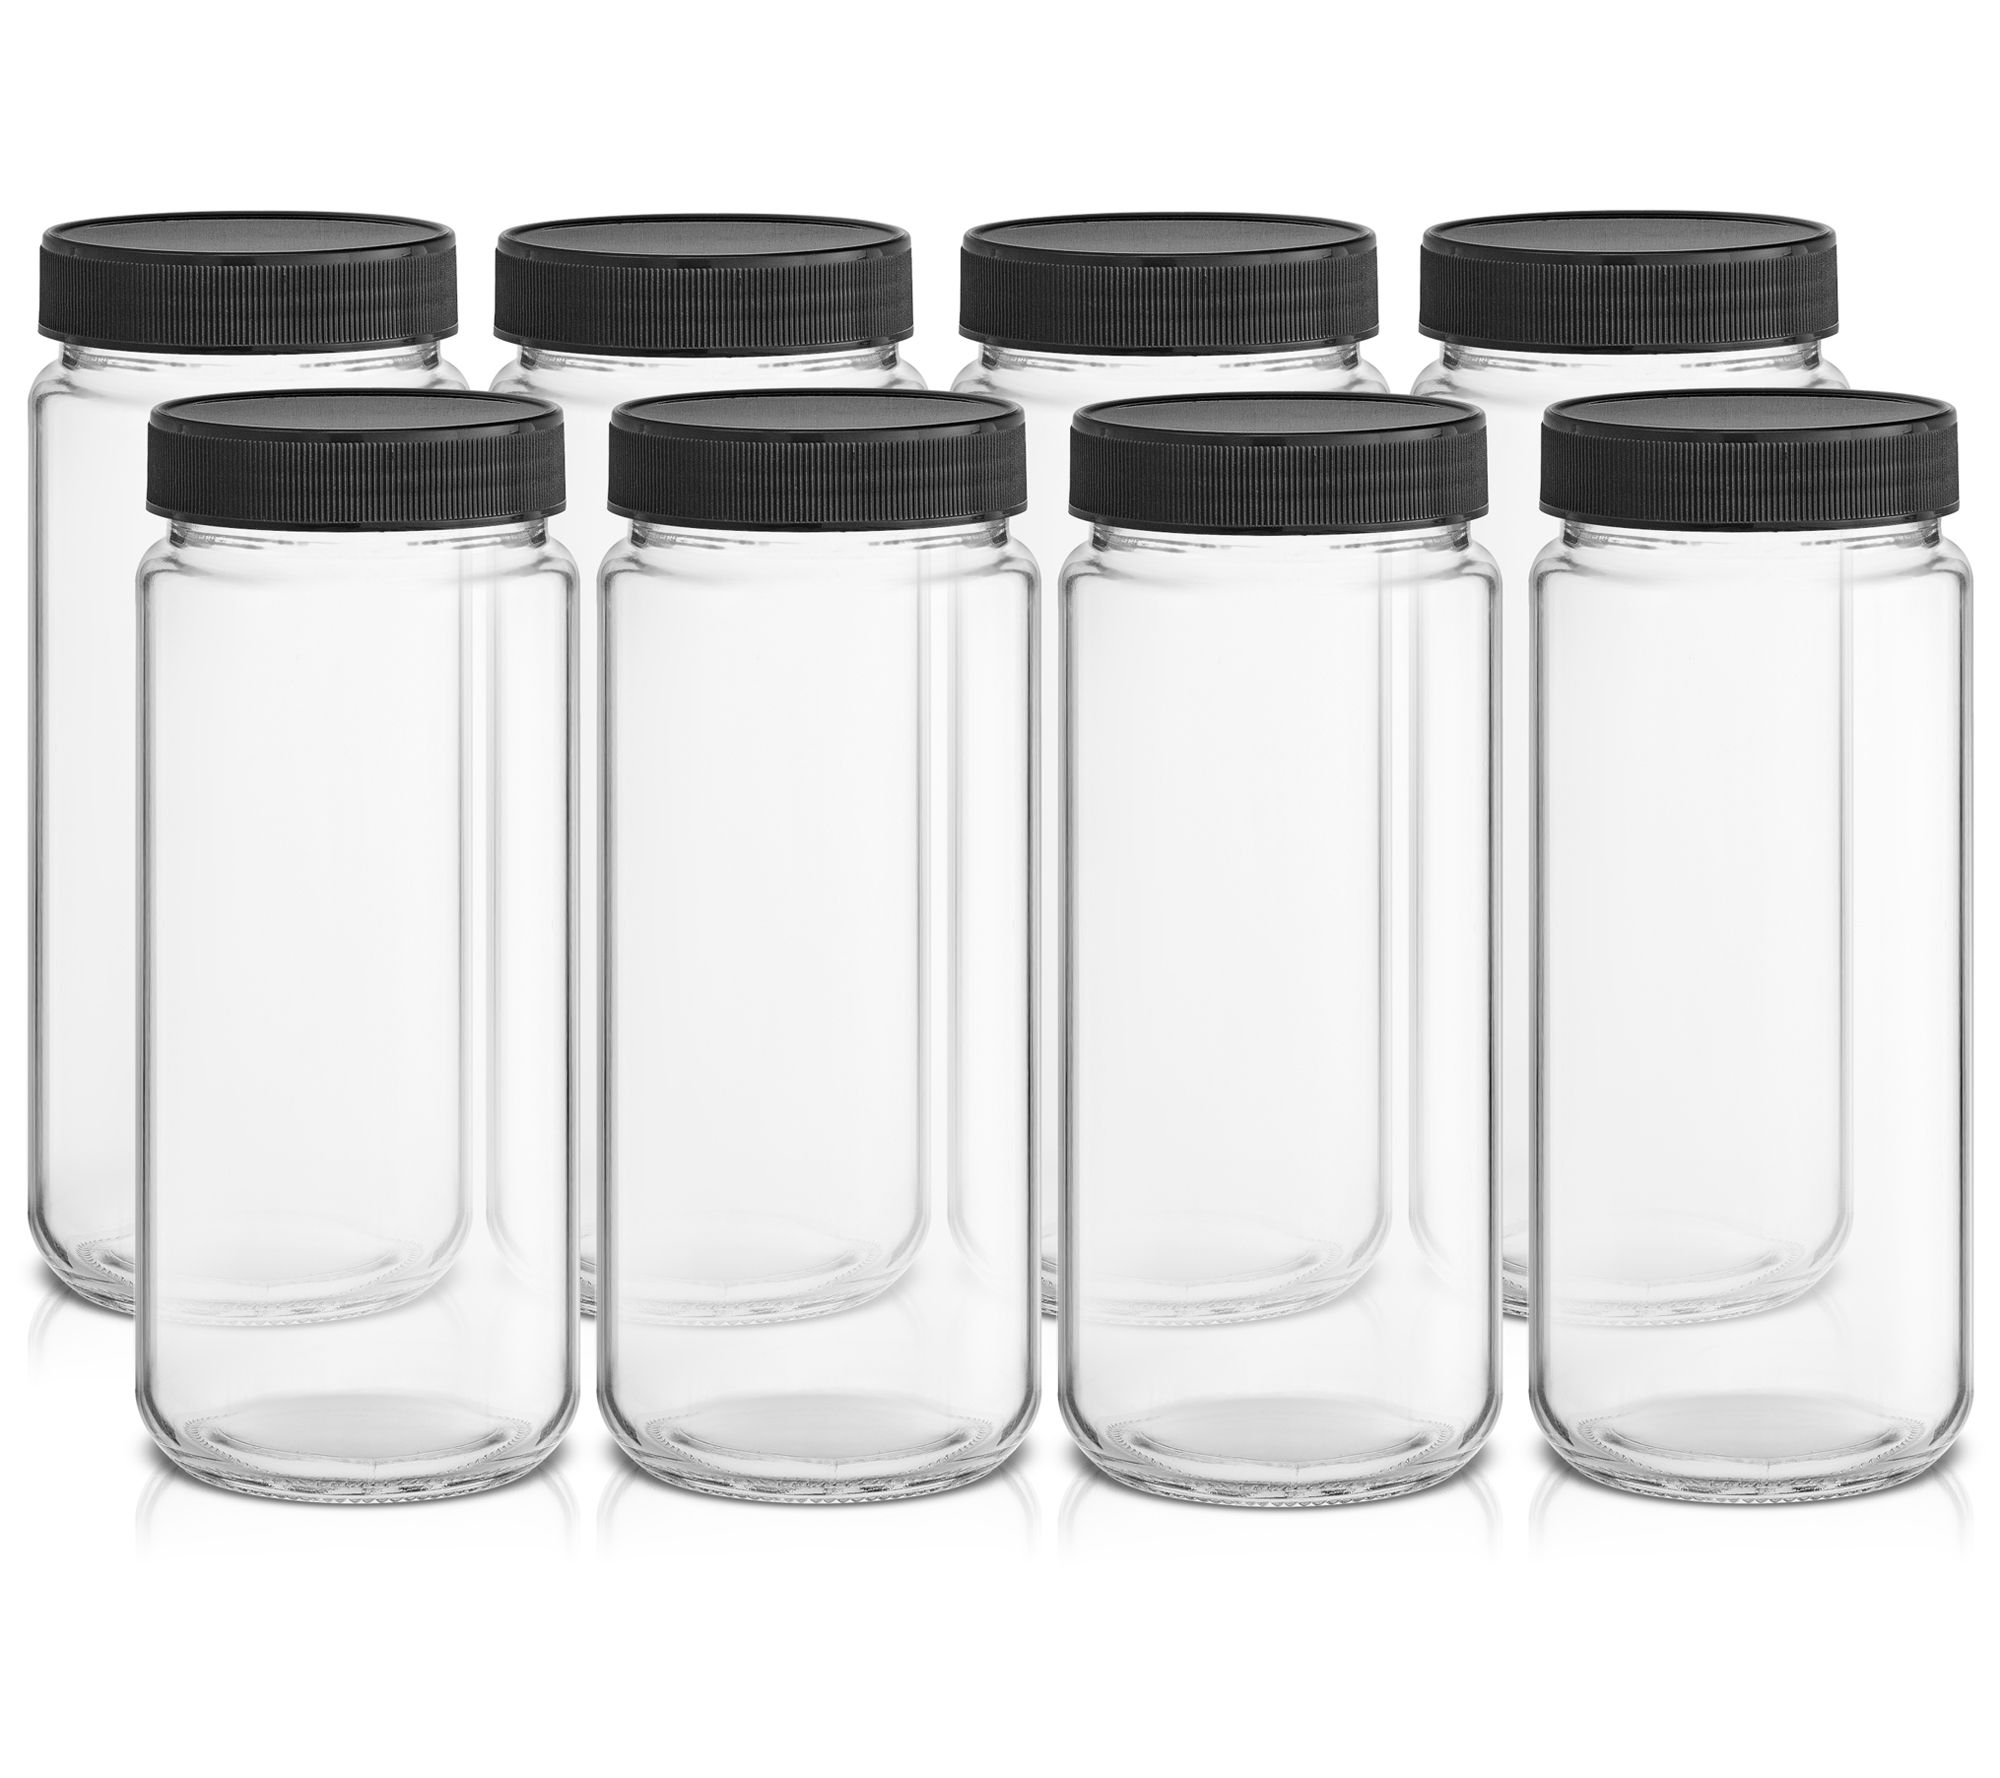 JoyJolt Glass Juice Bottles, 16 oz Glass Bottles with